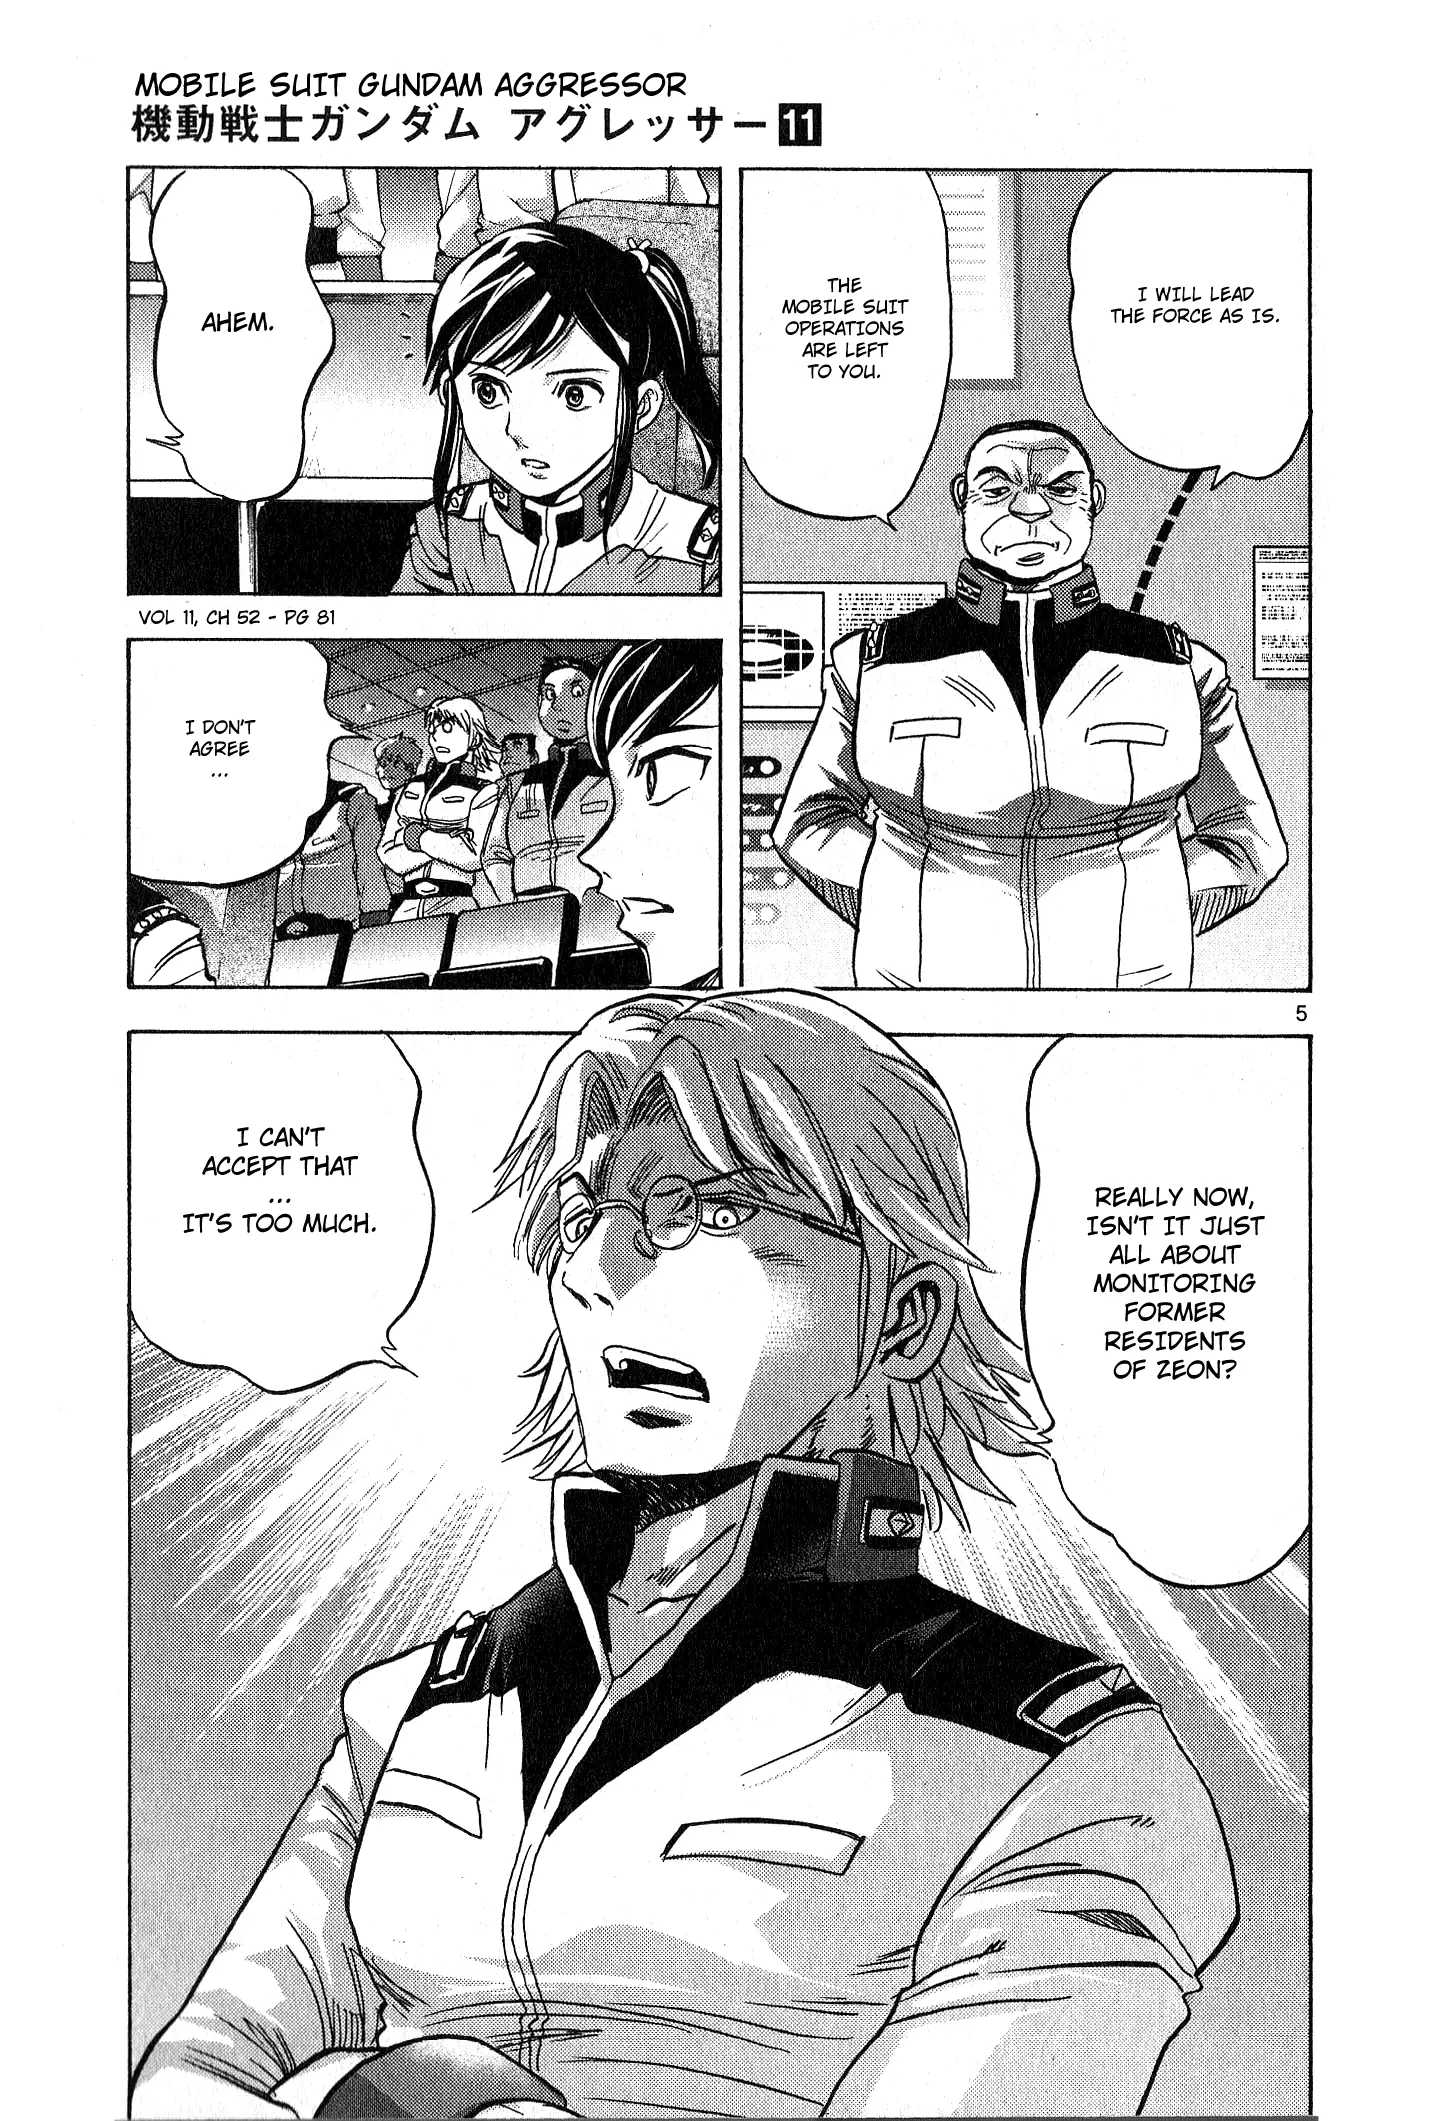 Mobile Suit Gundam Aggressor - 52 page 5-5547b446